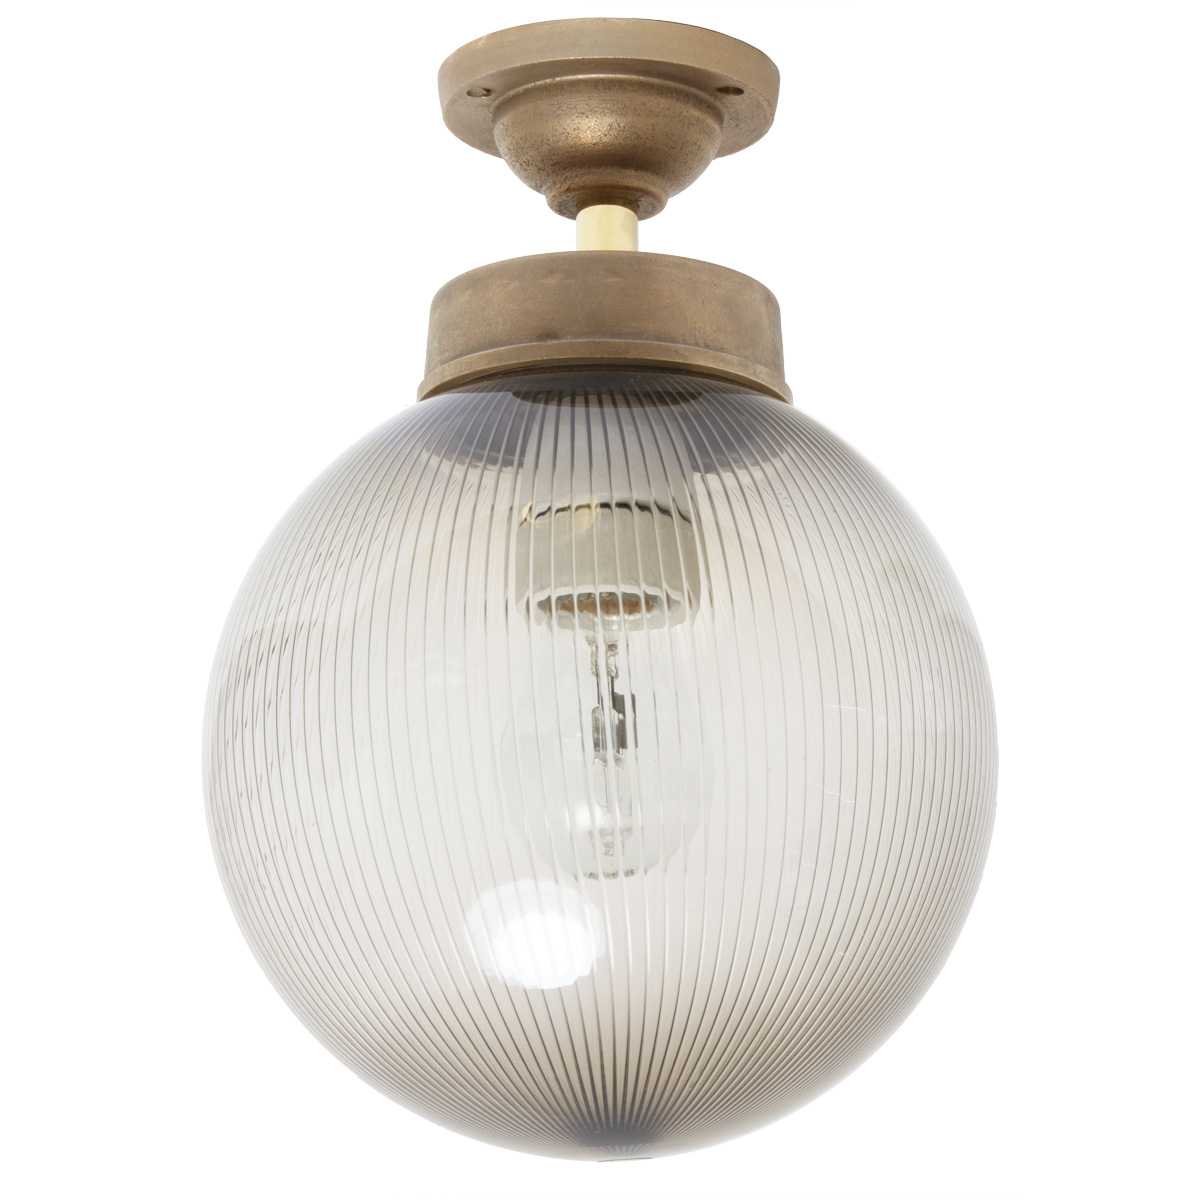 Brass Globe Light 38-CL 200